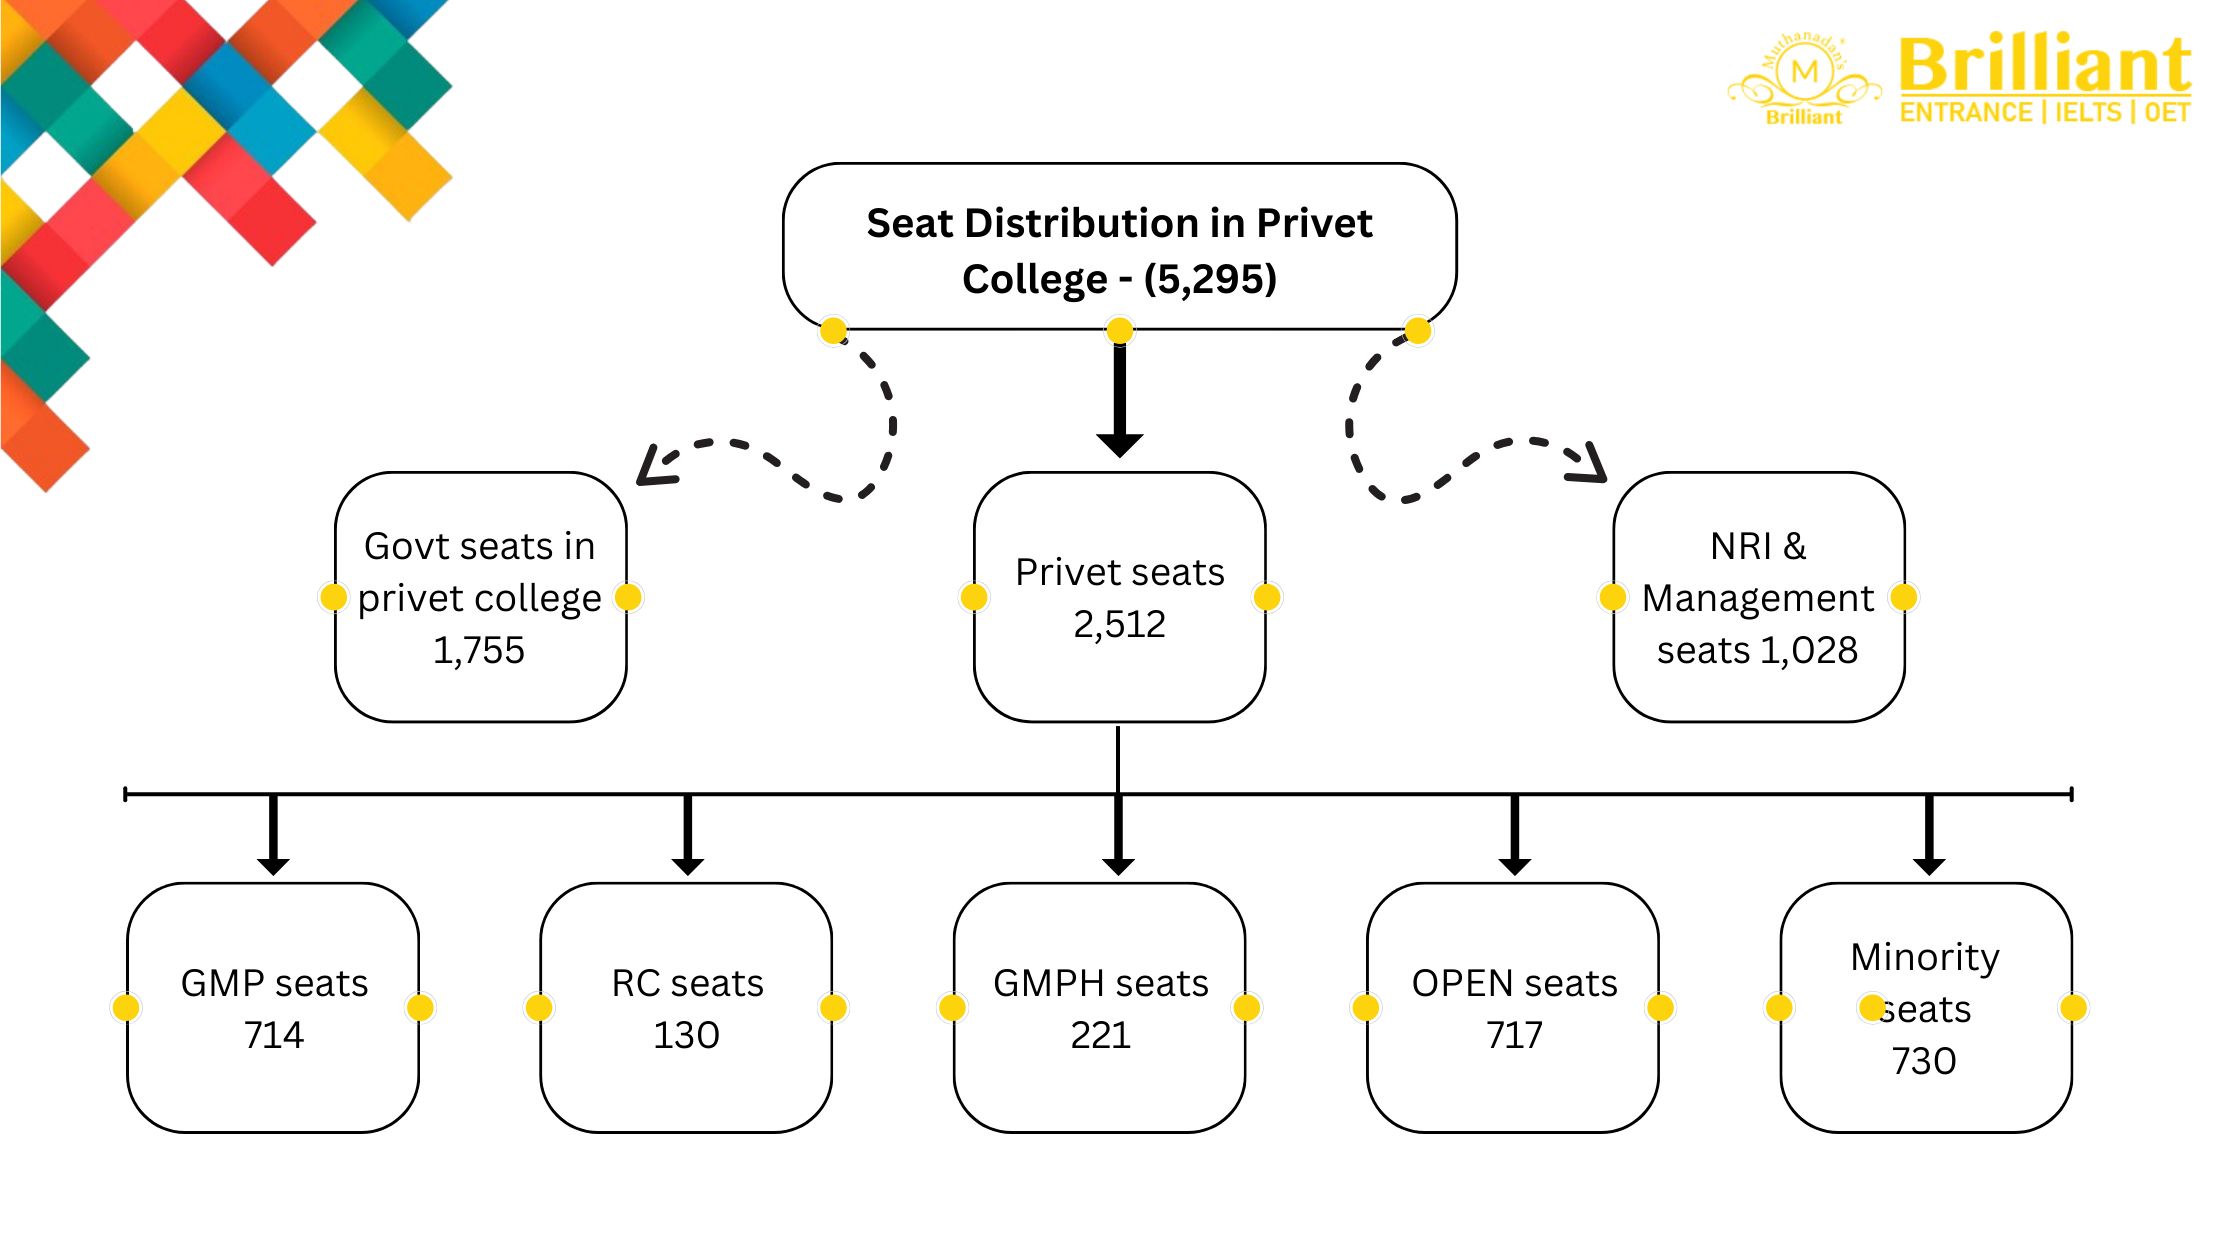 Seat Distribution in Privet College